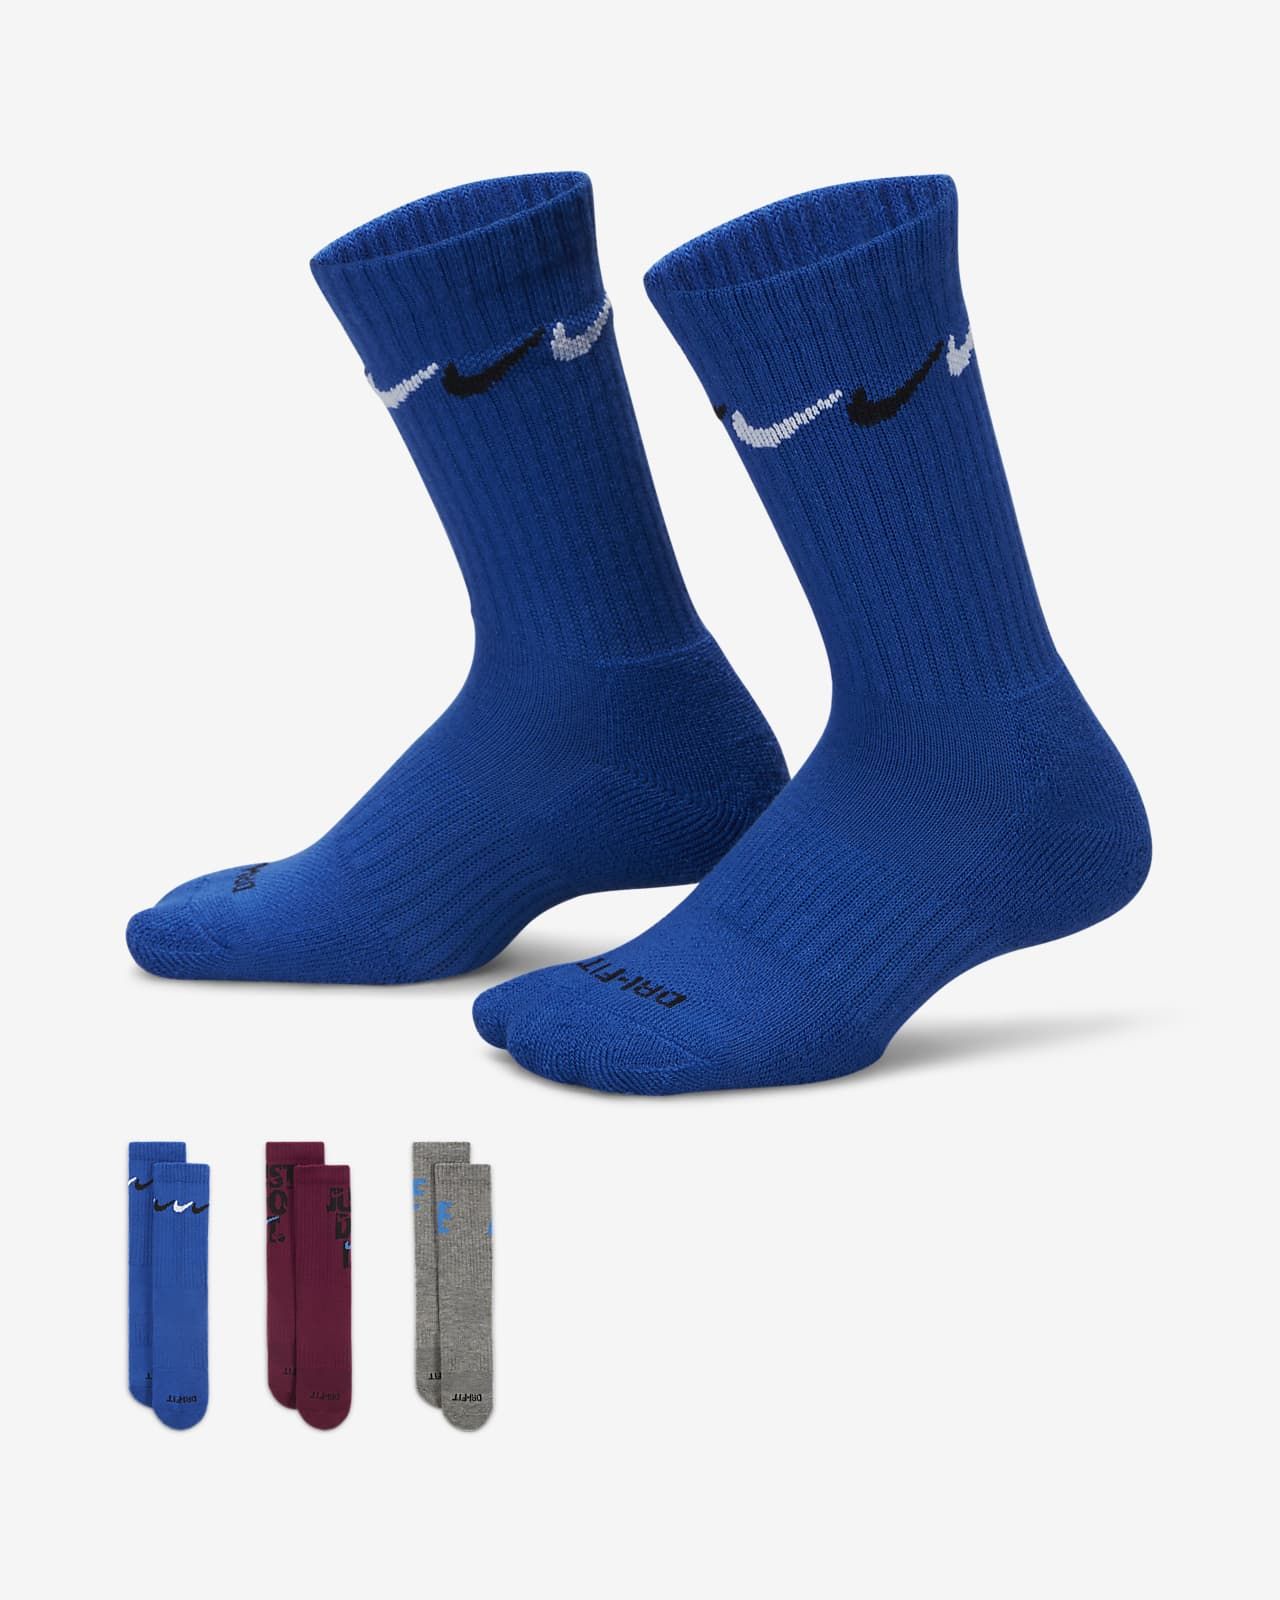 Little Kids' Socks | Nike (US)